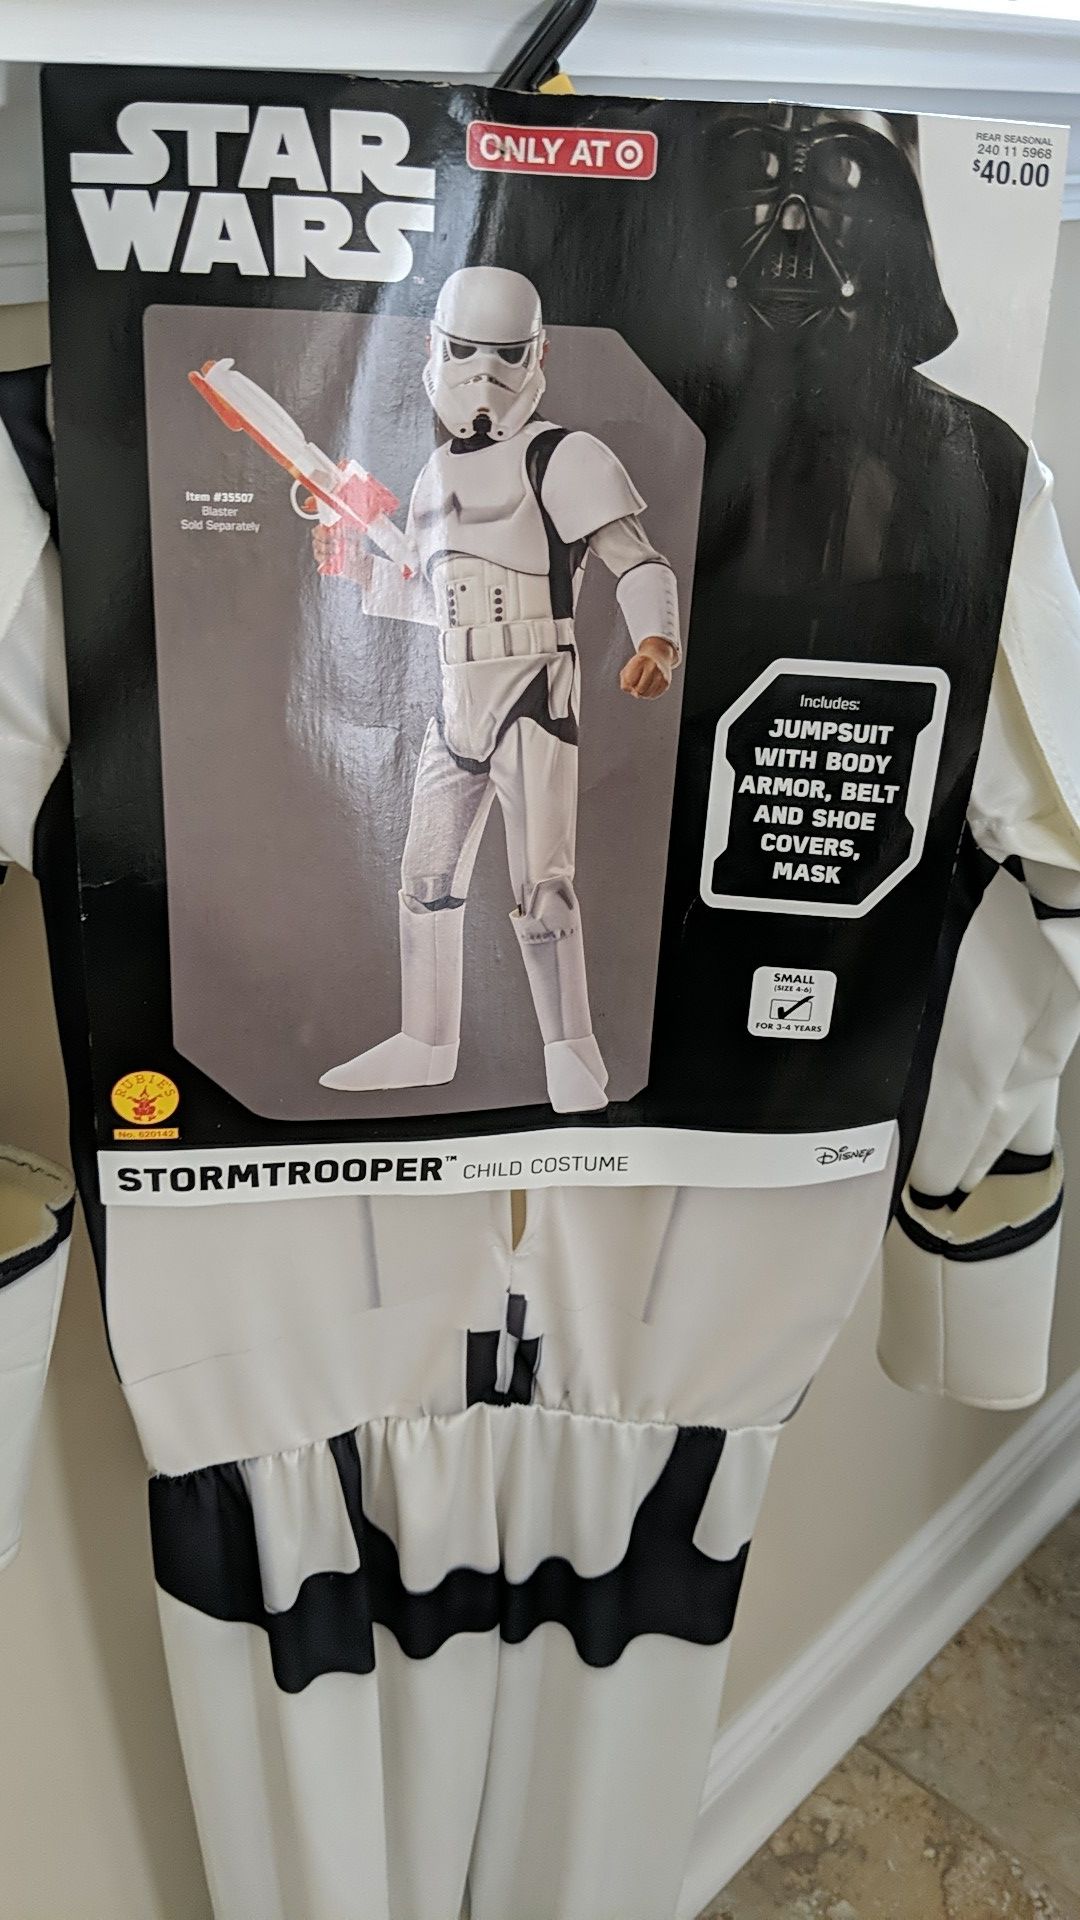 Star Wars stormtrooper child costume for Halloween.